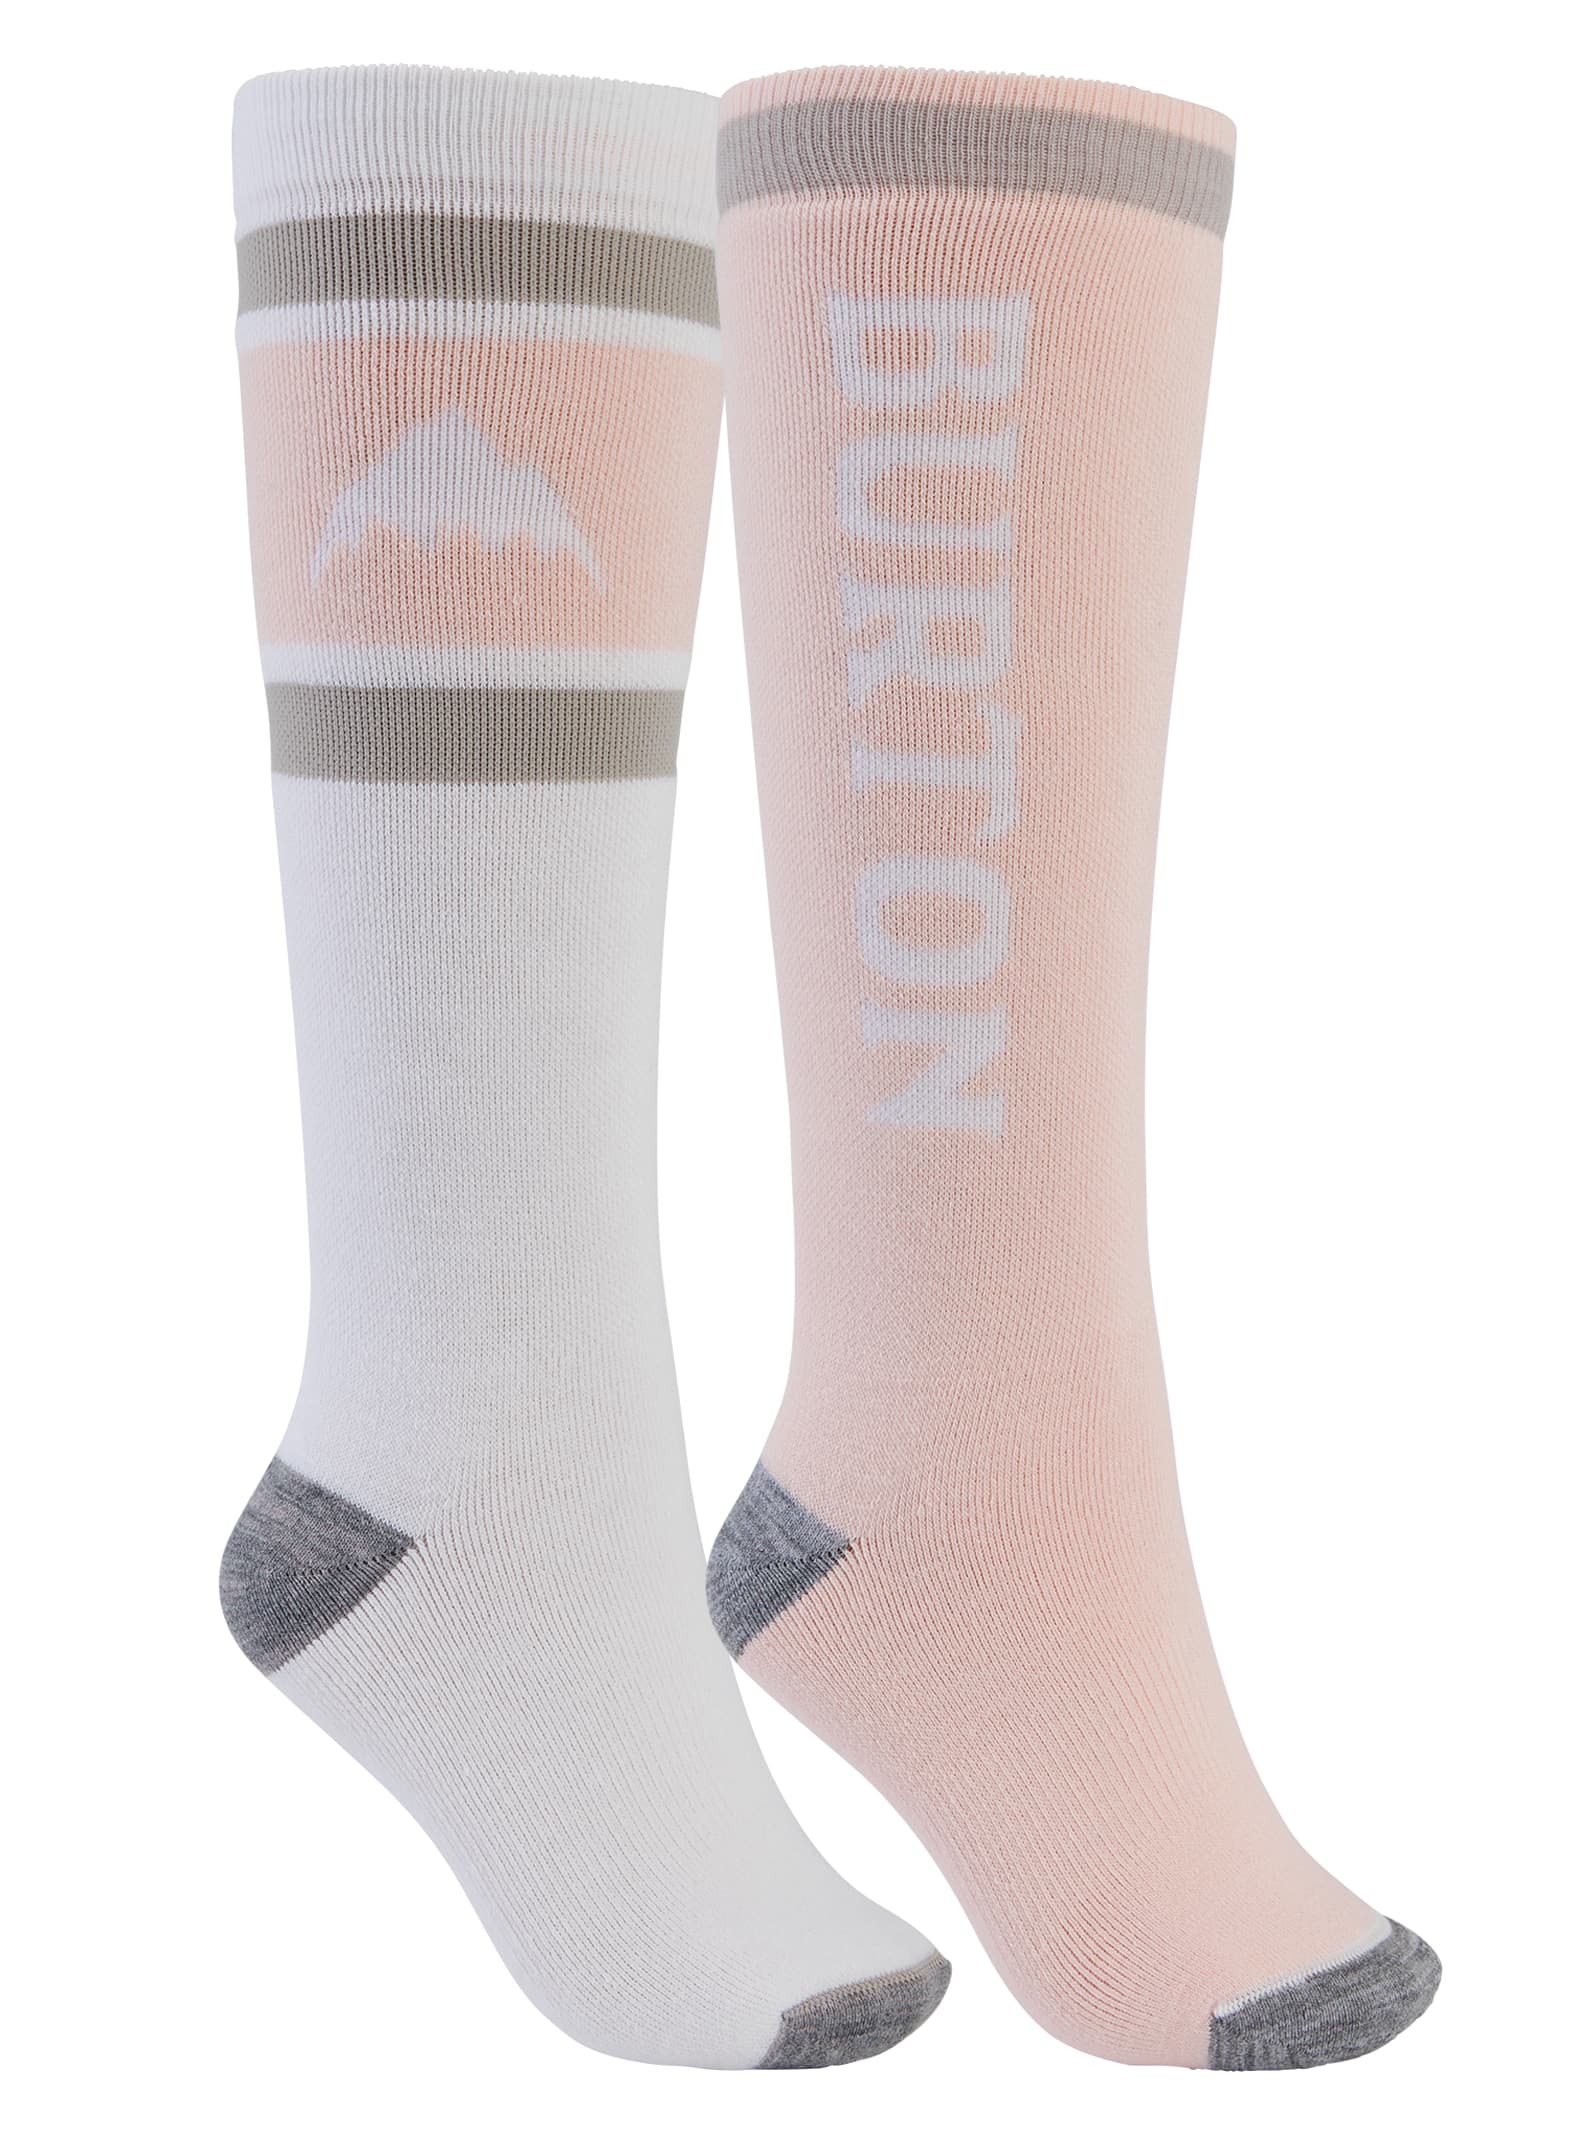 Women's Socks | Burton Snowboards US